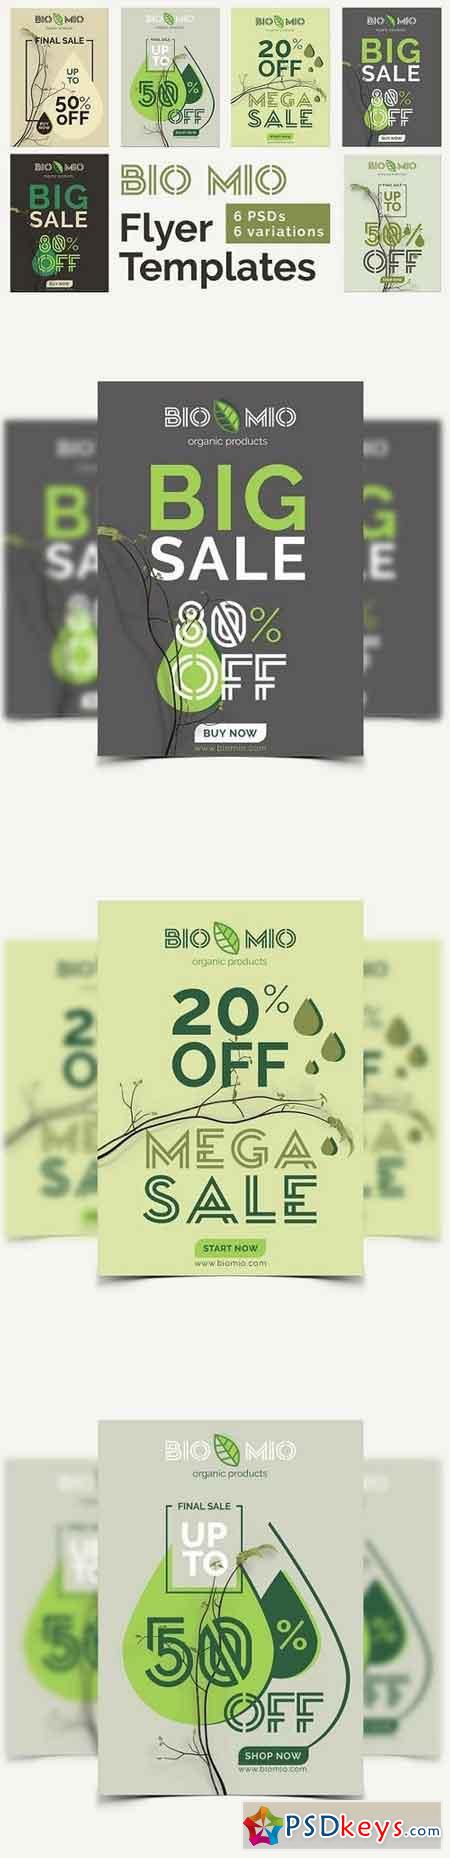 Bio Mio Promotional Flyer Templates 1338575